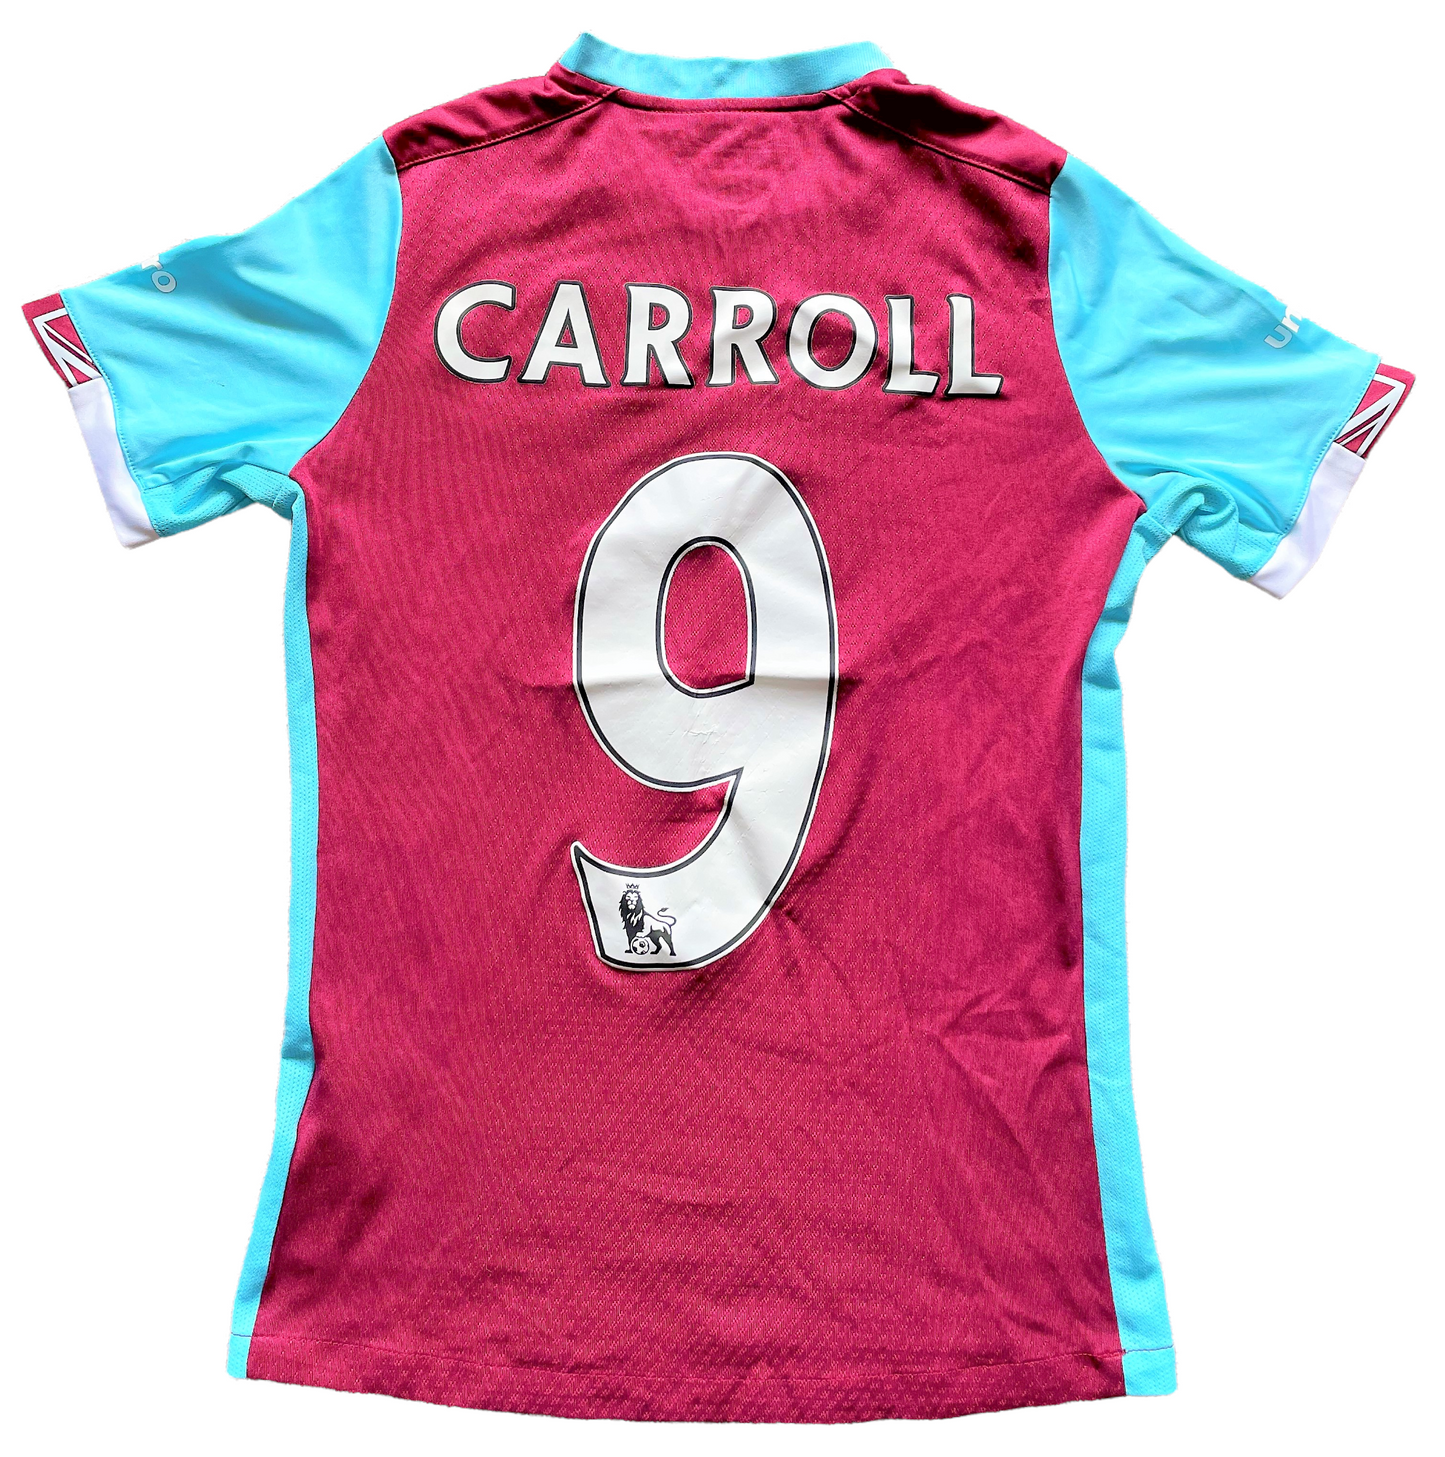 2016-17 West Ham Home Shirt CARROLL #9 (very good) Large Boys